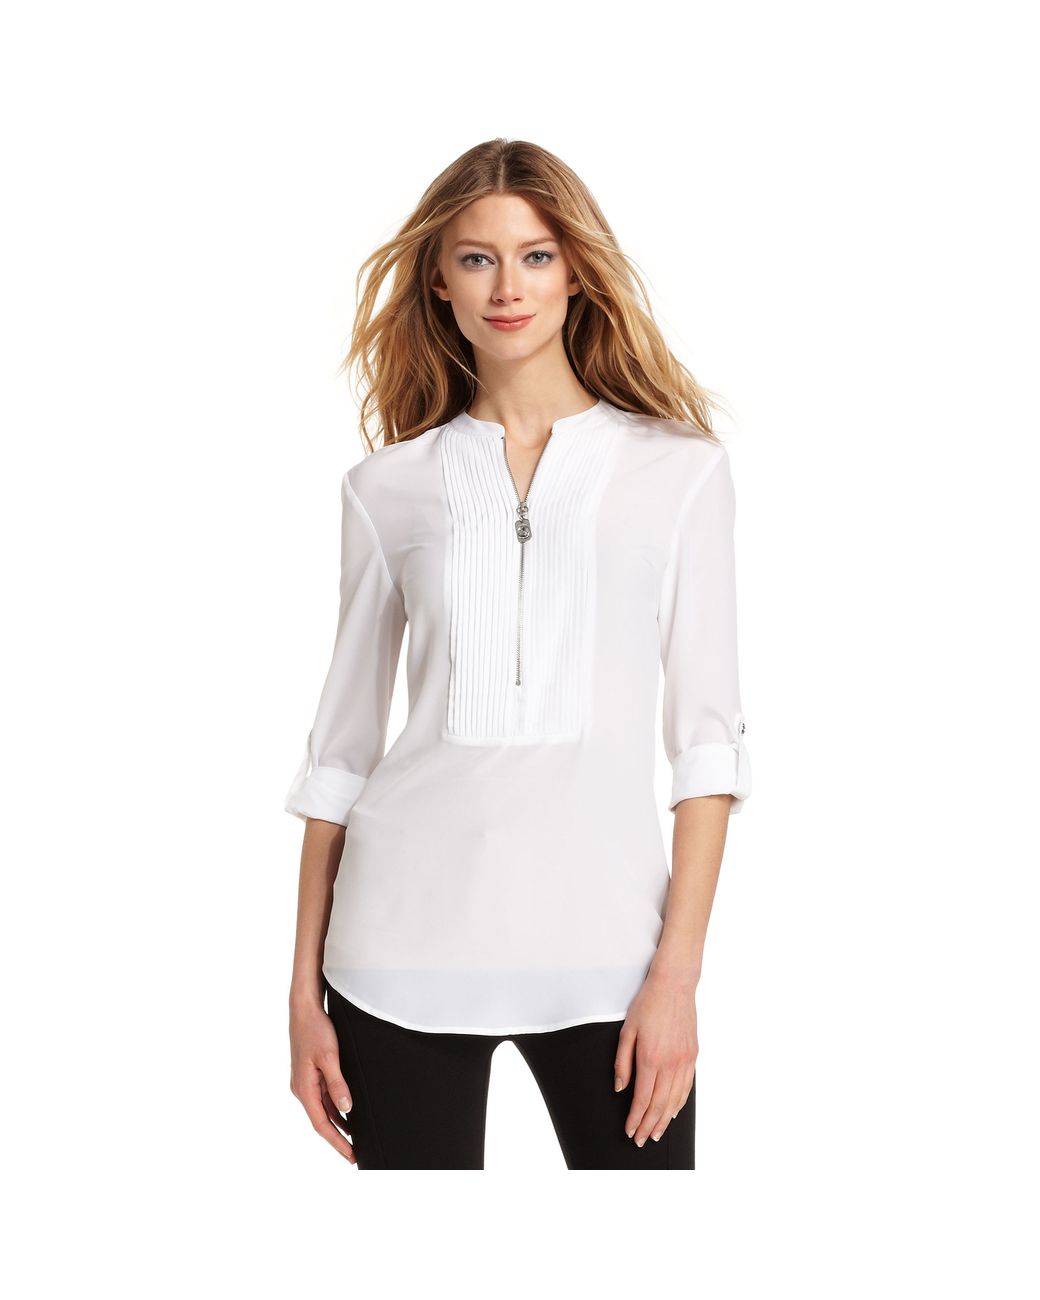 Michael Kors TUXEDO SHIRT  Formal shirt  white  Zalandode